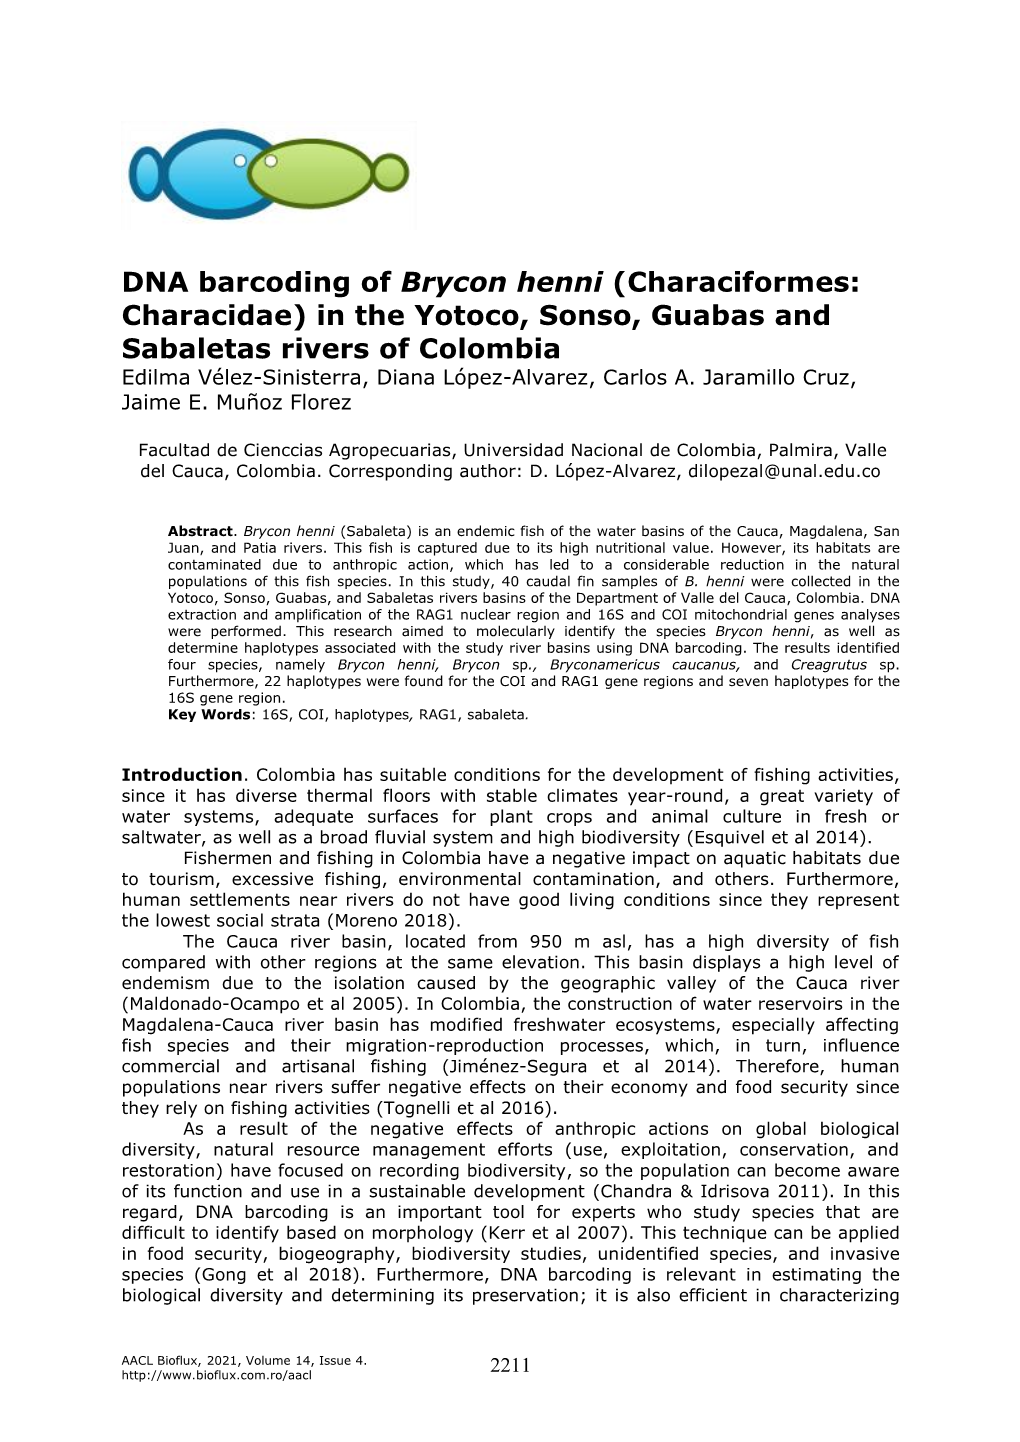 DNA Barcoding of Brycon Henni